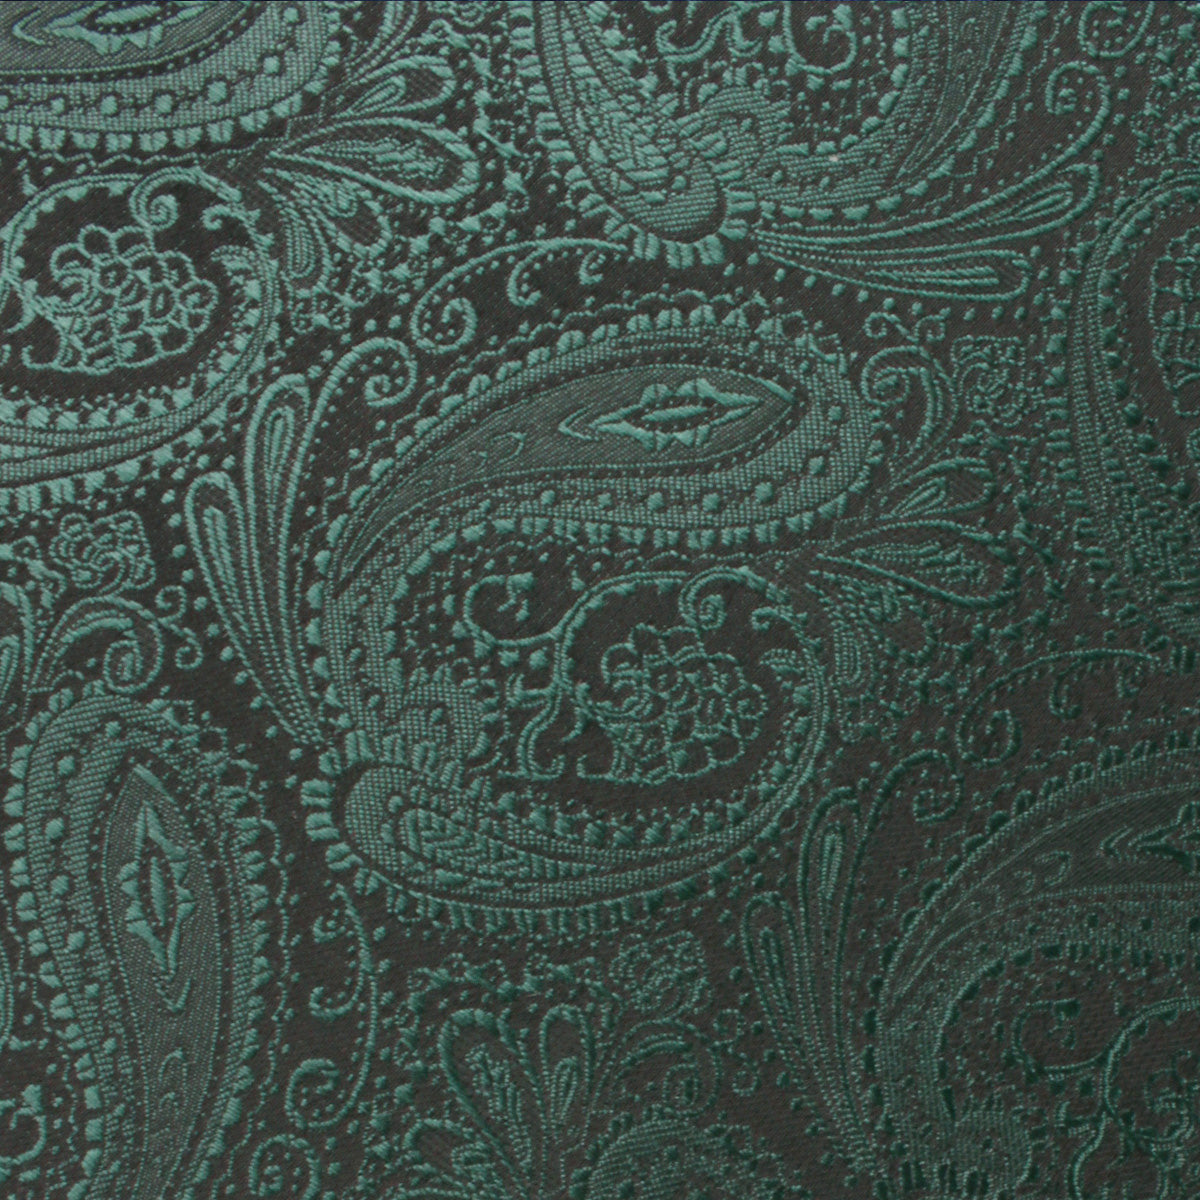 Emerald Green Paisley Necktie Fabric